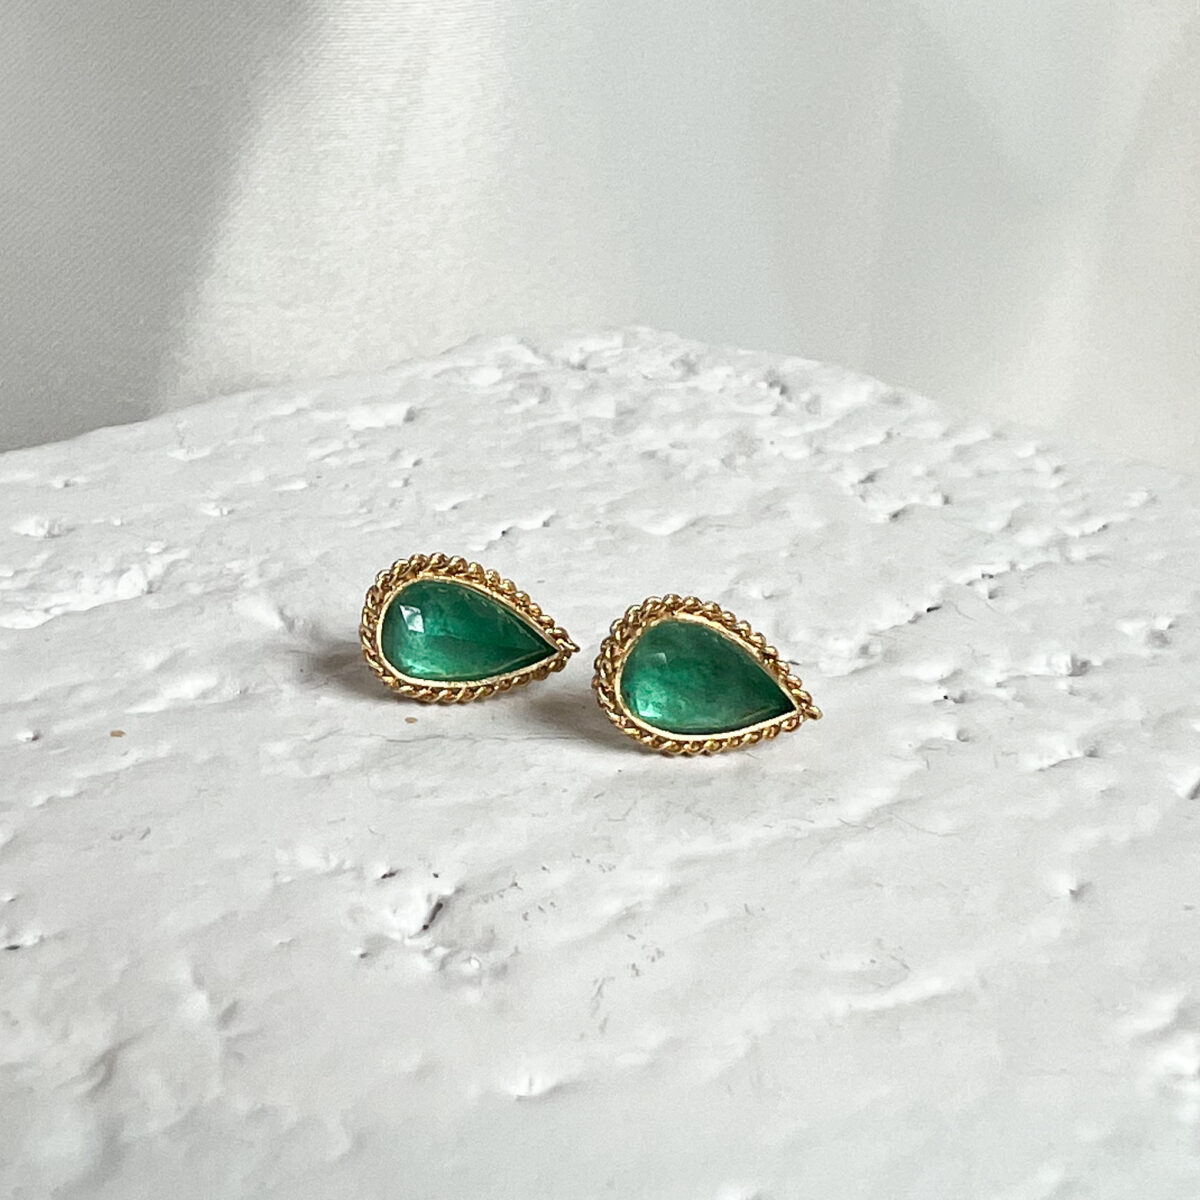 Columbian Emerald Stud Earrings